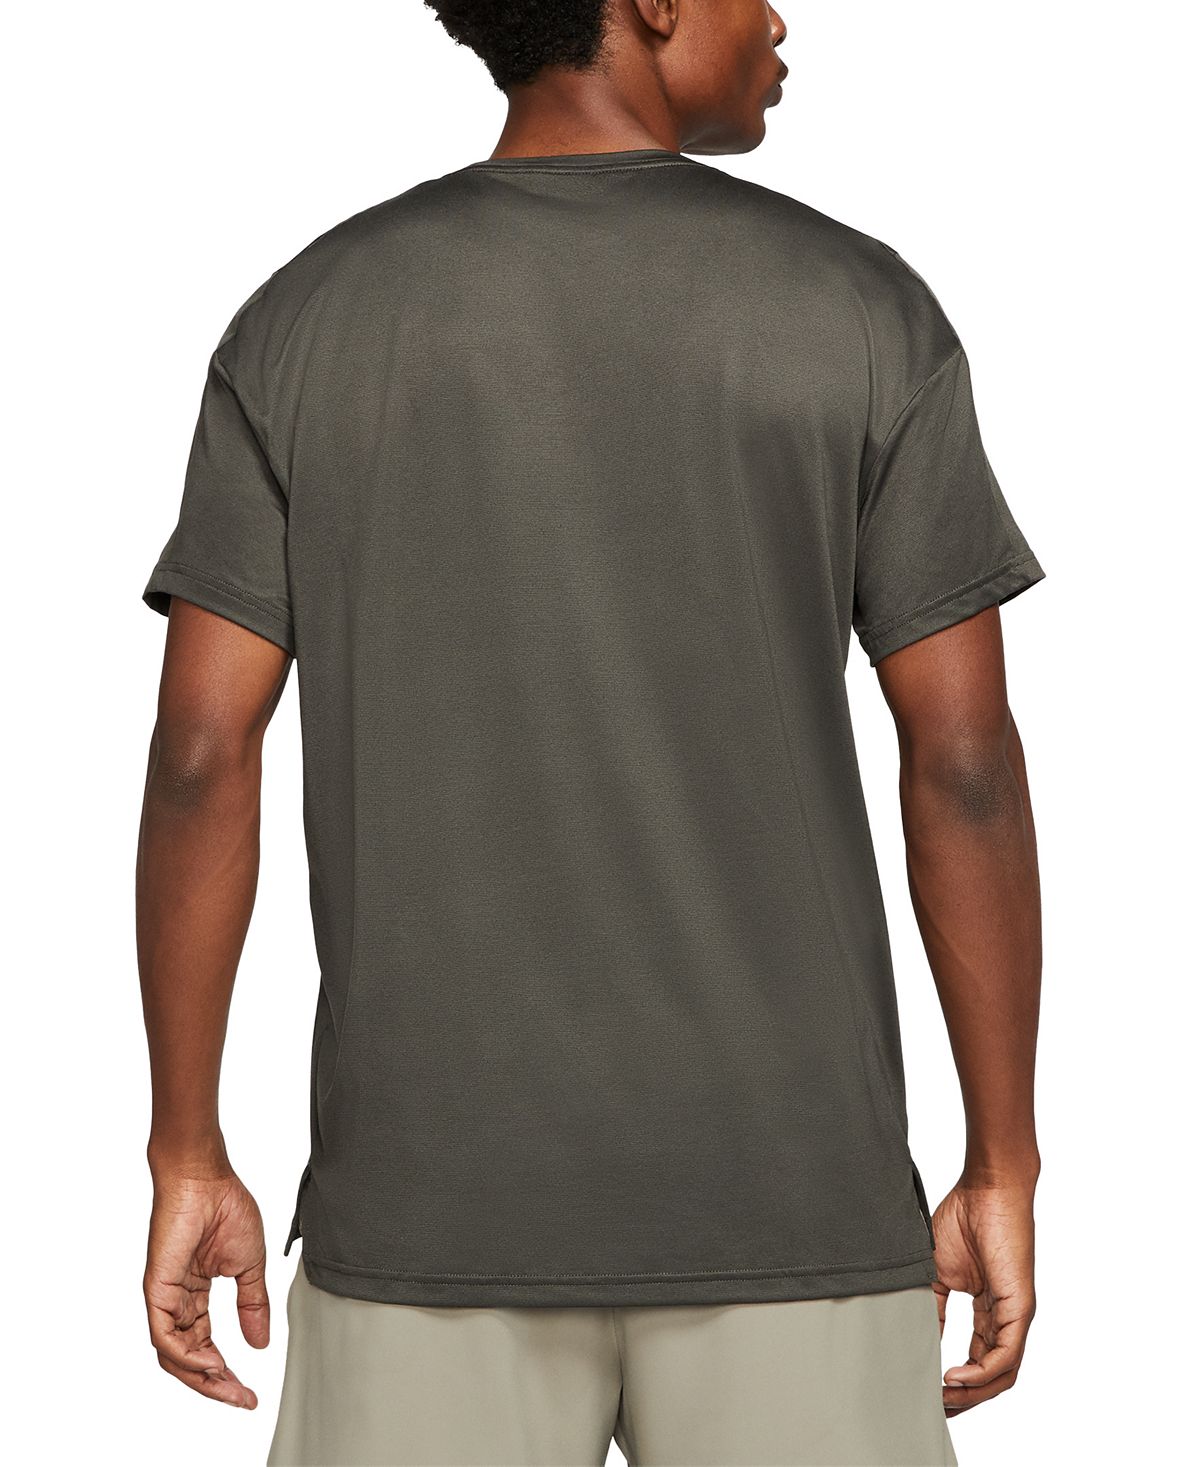 Nike Hyperdry Training T-shirt Sequoia